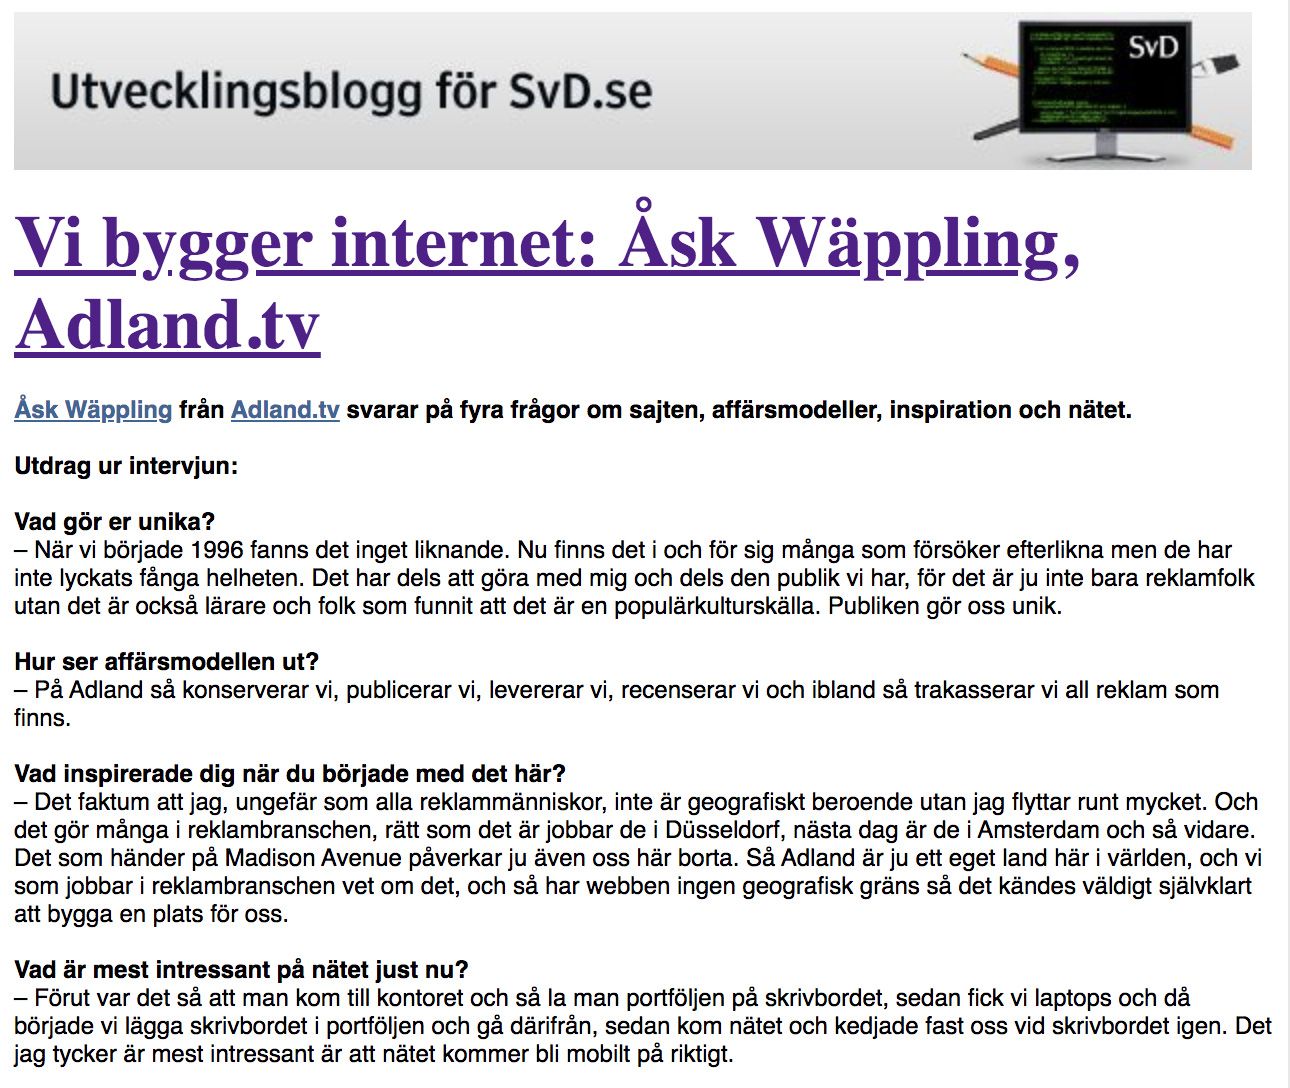 "We build the internet" SvD utvecklingsblogg interviews Dabitch